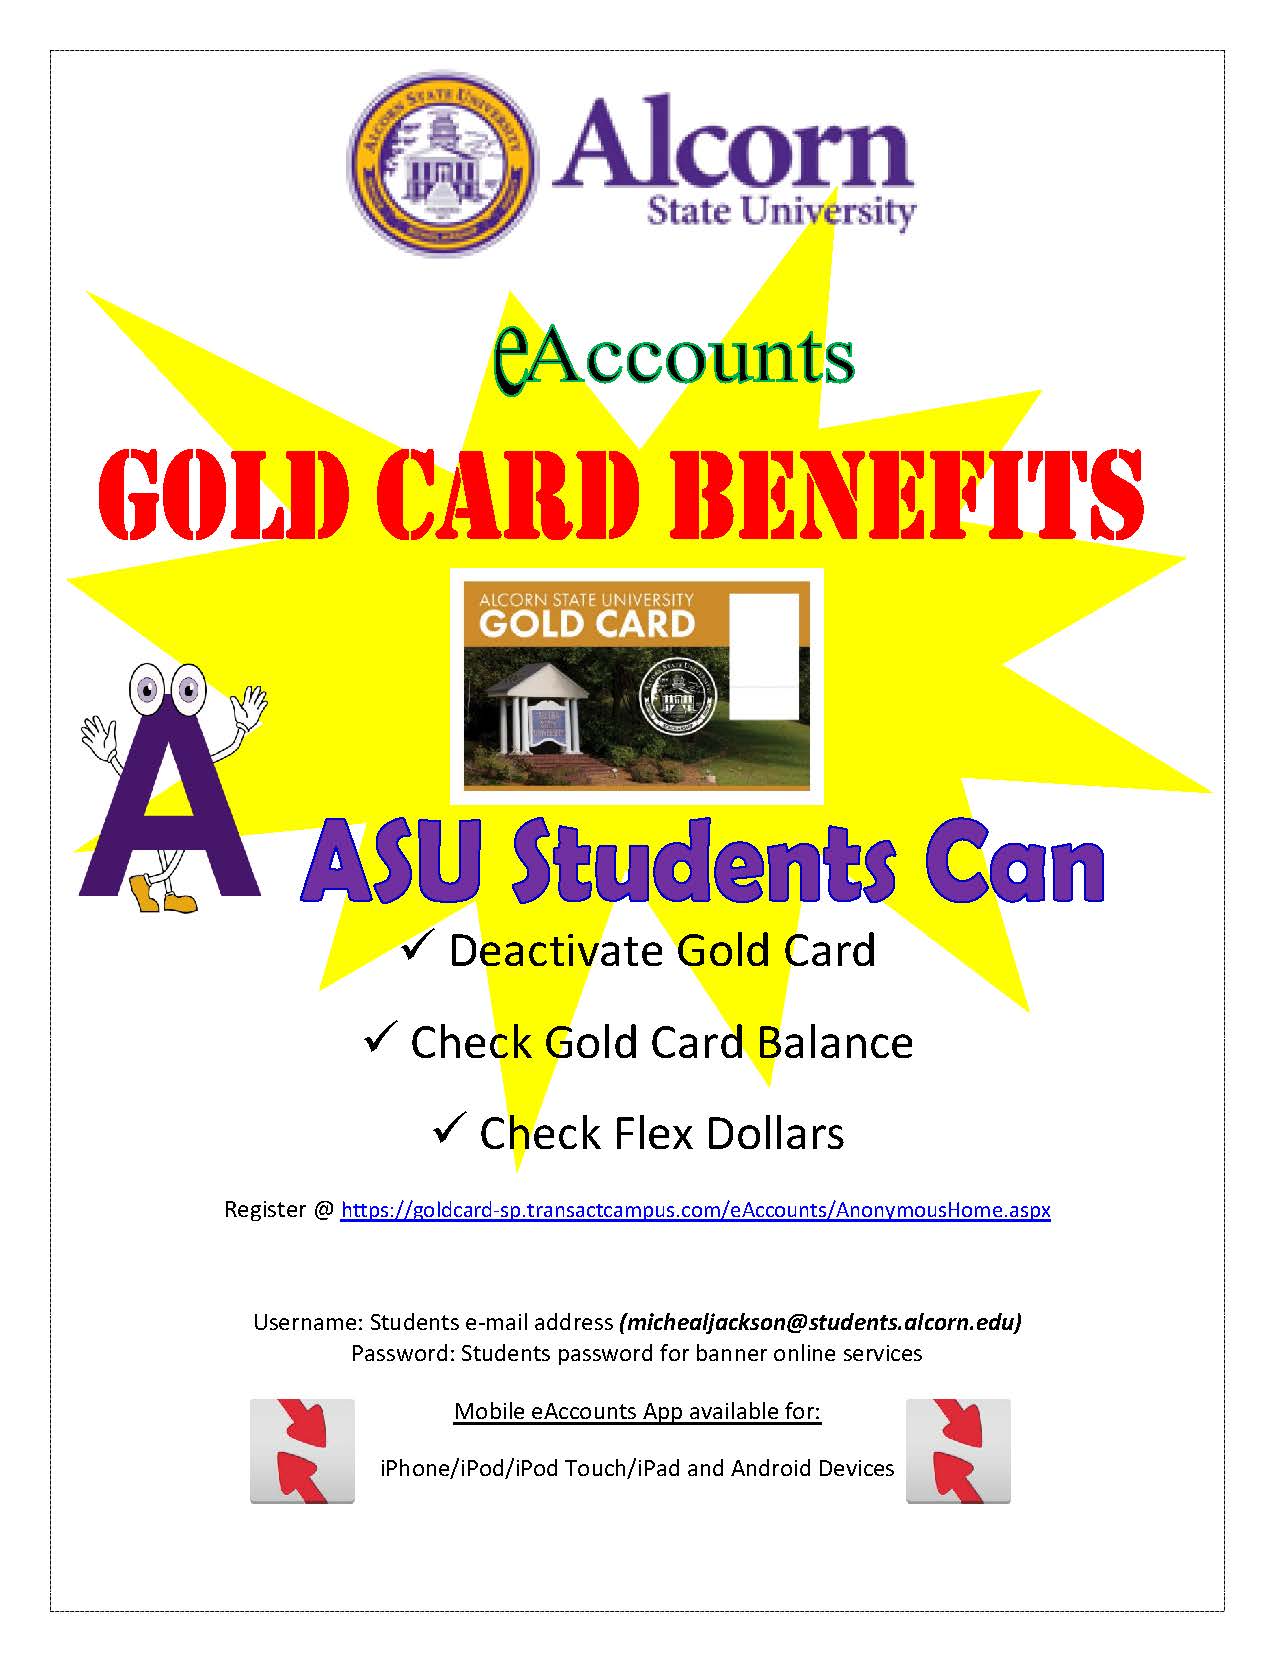 Alcorn Gold Card benefits image